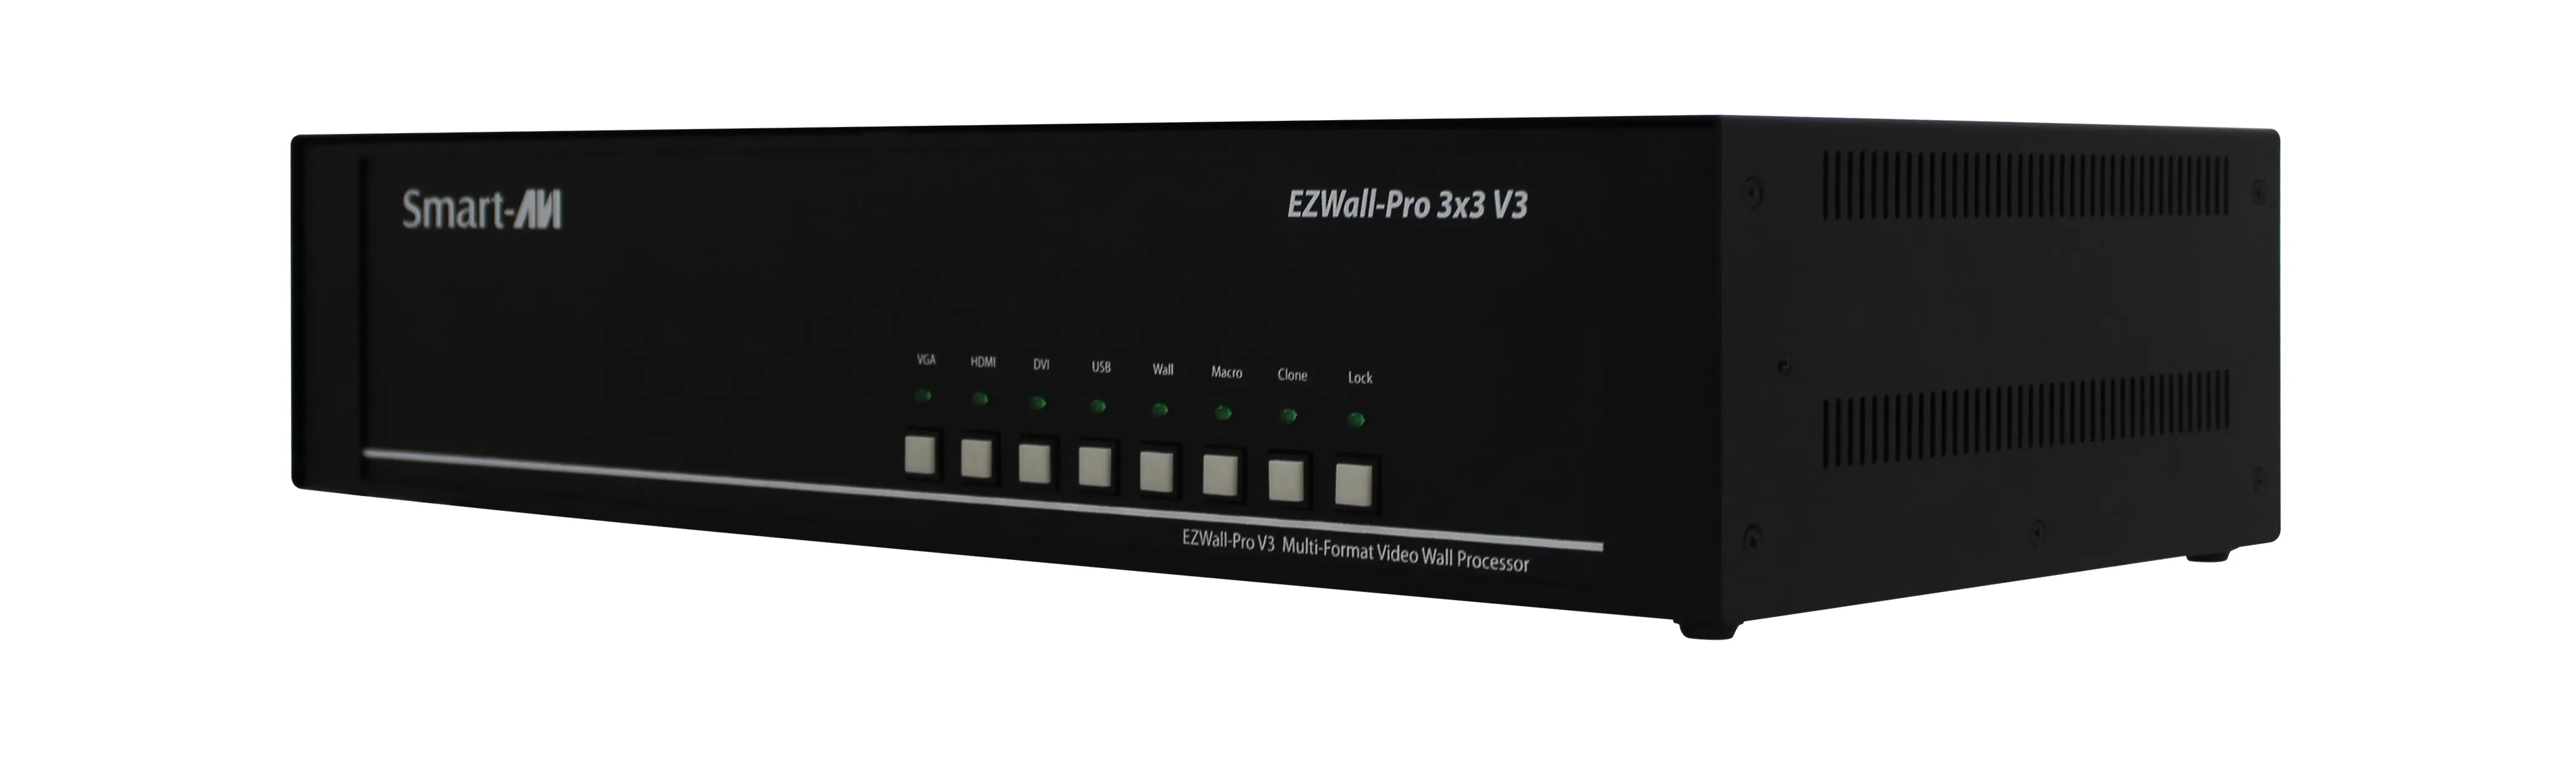 EZWALL-Pro 3x3 V3